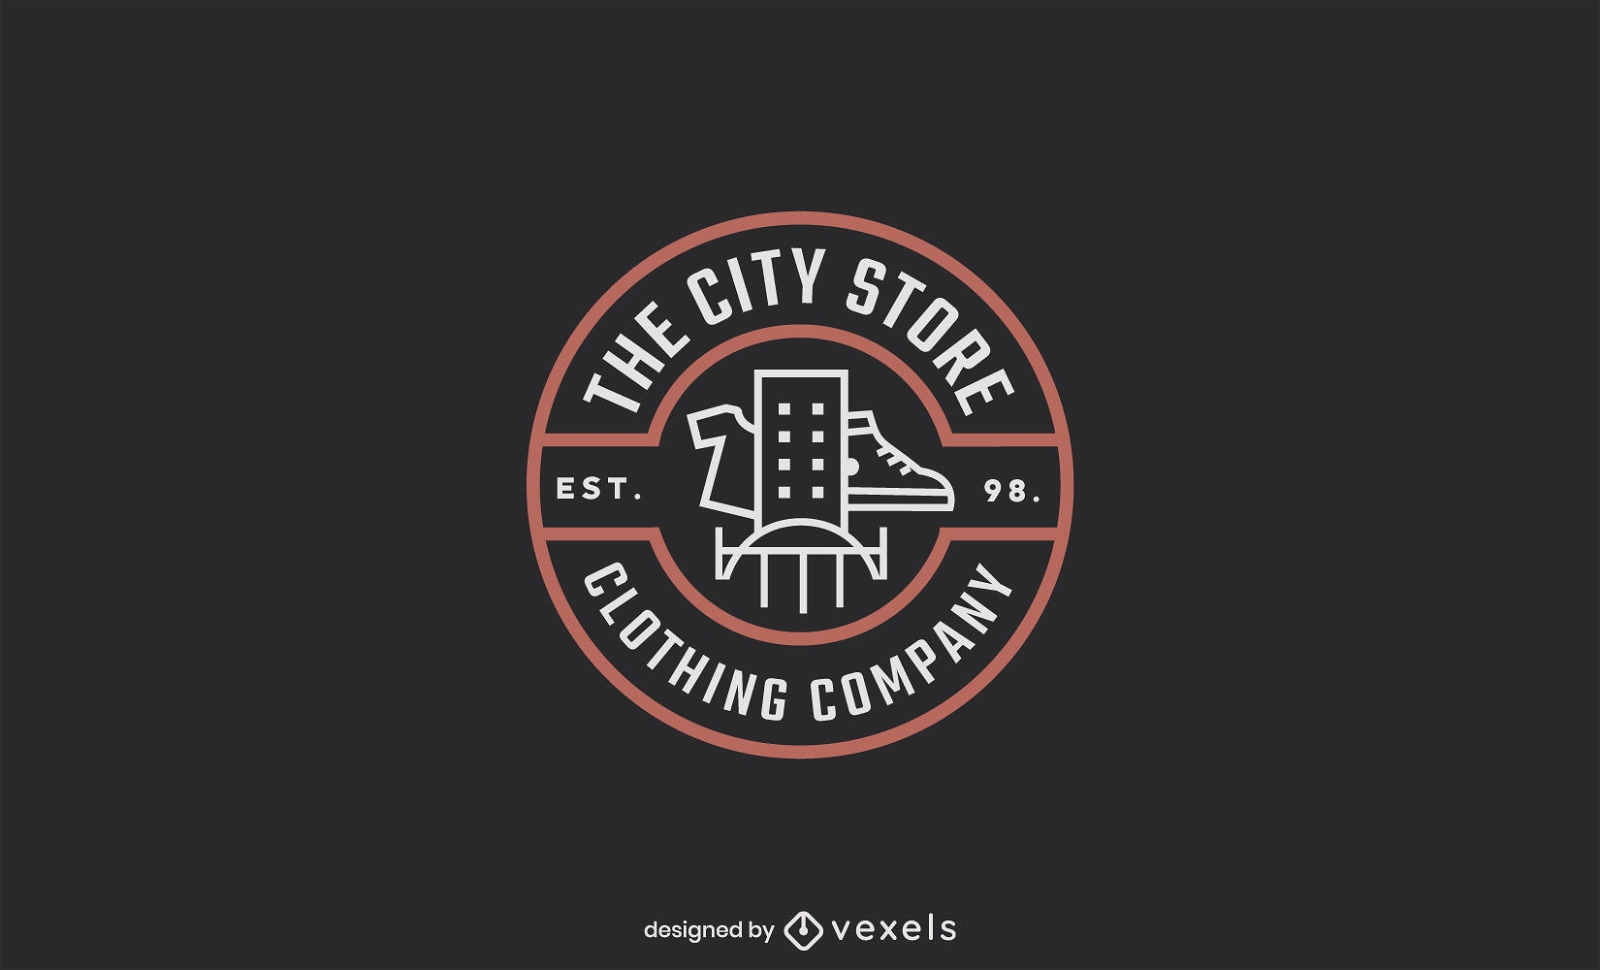 Diseño de logotipo de empresa de ropa urbana.